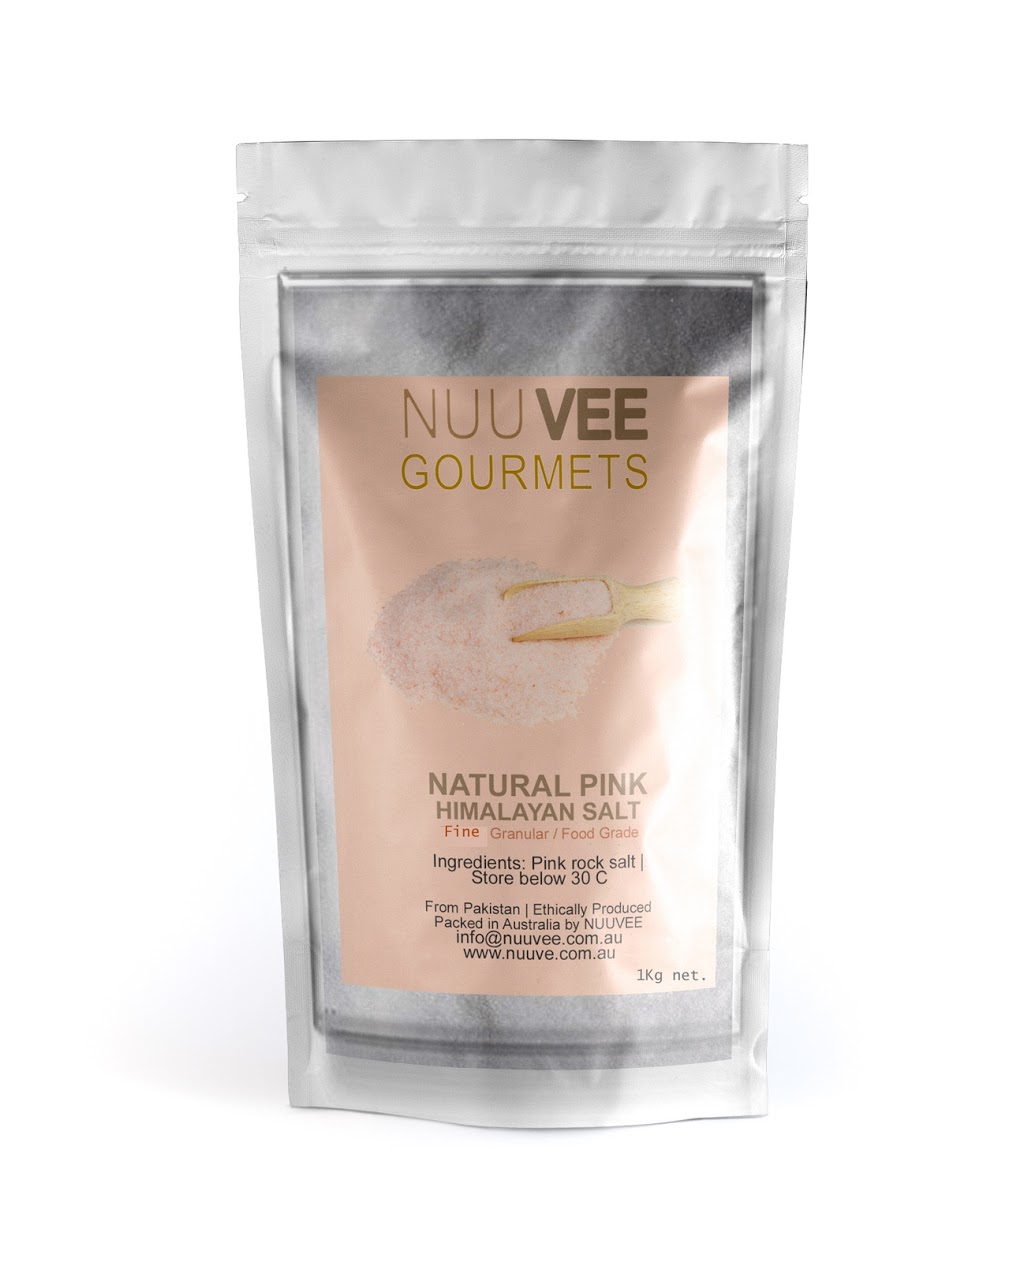 Nuuvee Essentials | health | 1/8 Bowen Cres, West Gosford NSW 2250, Australia | 0412835072 OR +61 412 835 072